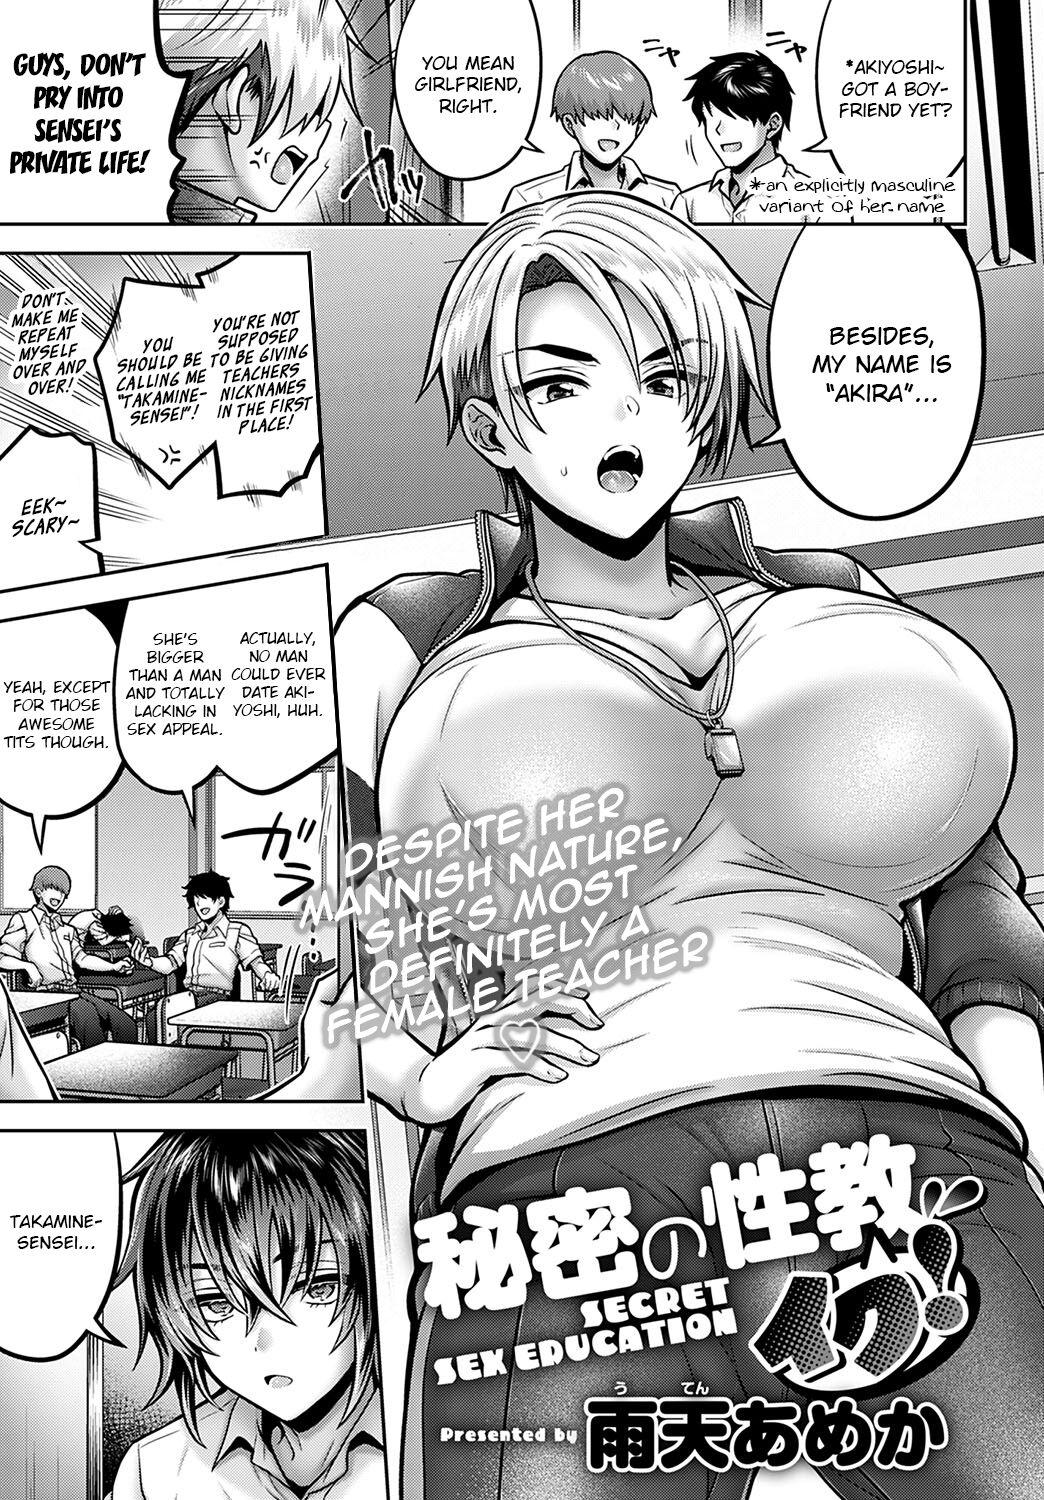 Huge Himitsu no sei kyō Iku! | Secret Sex Education! Pussysex - Picture 1